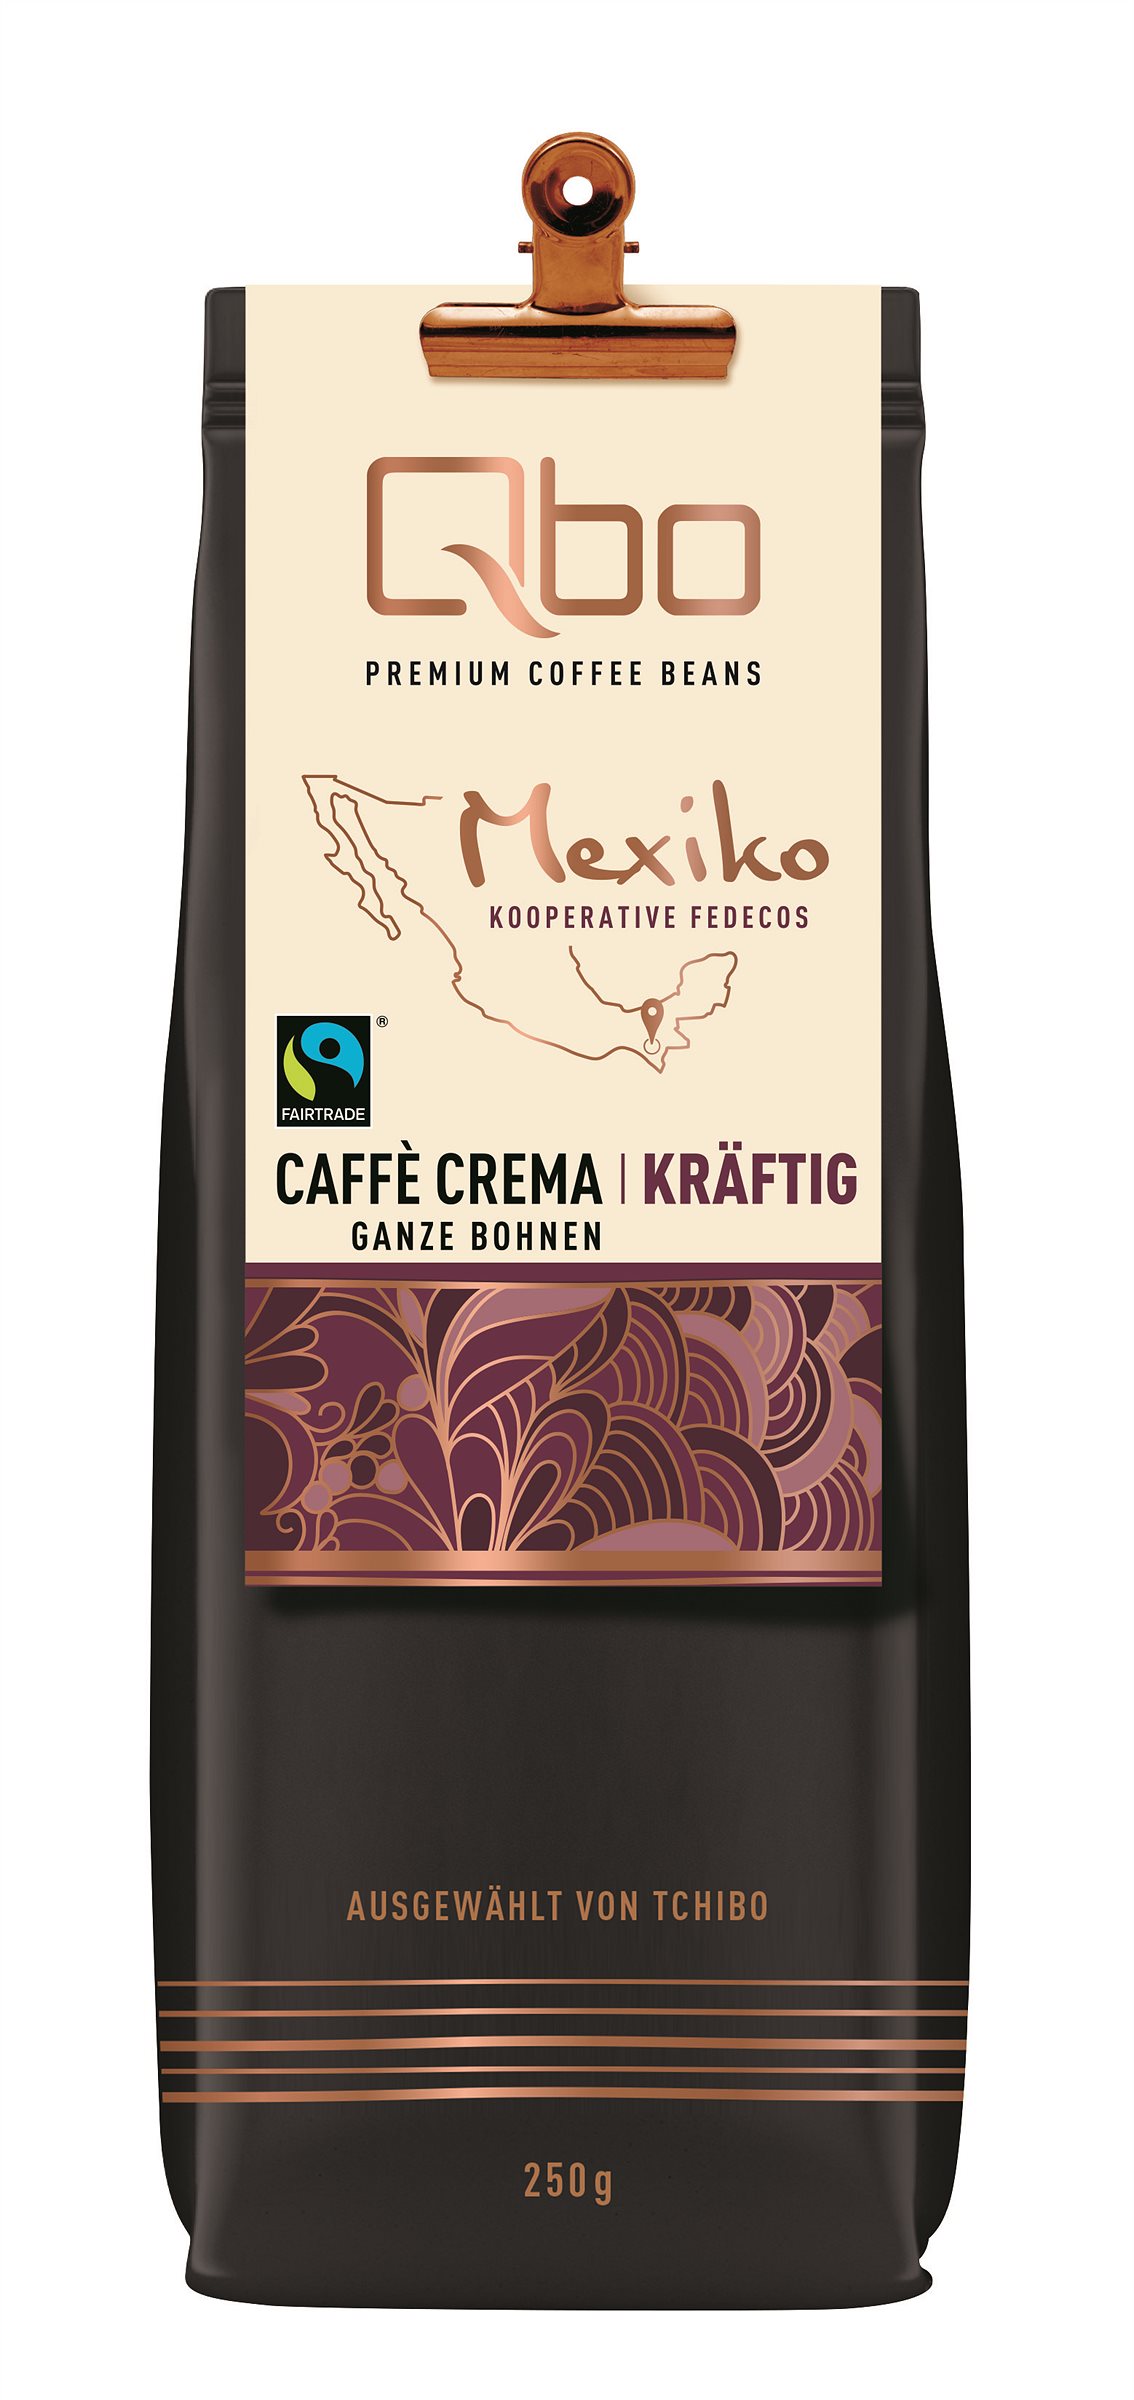 Qbo Premium Coffee Beans Mexiko_Caffè Crema kraeftig